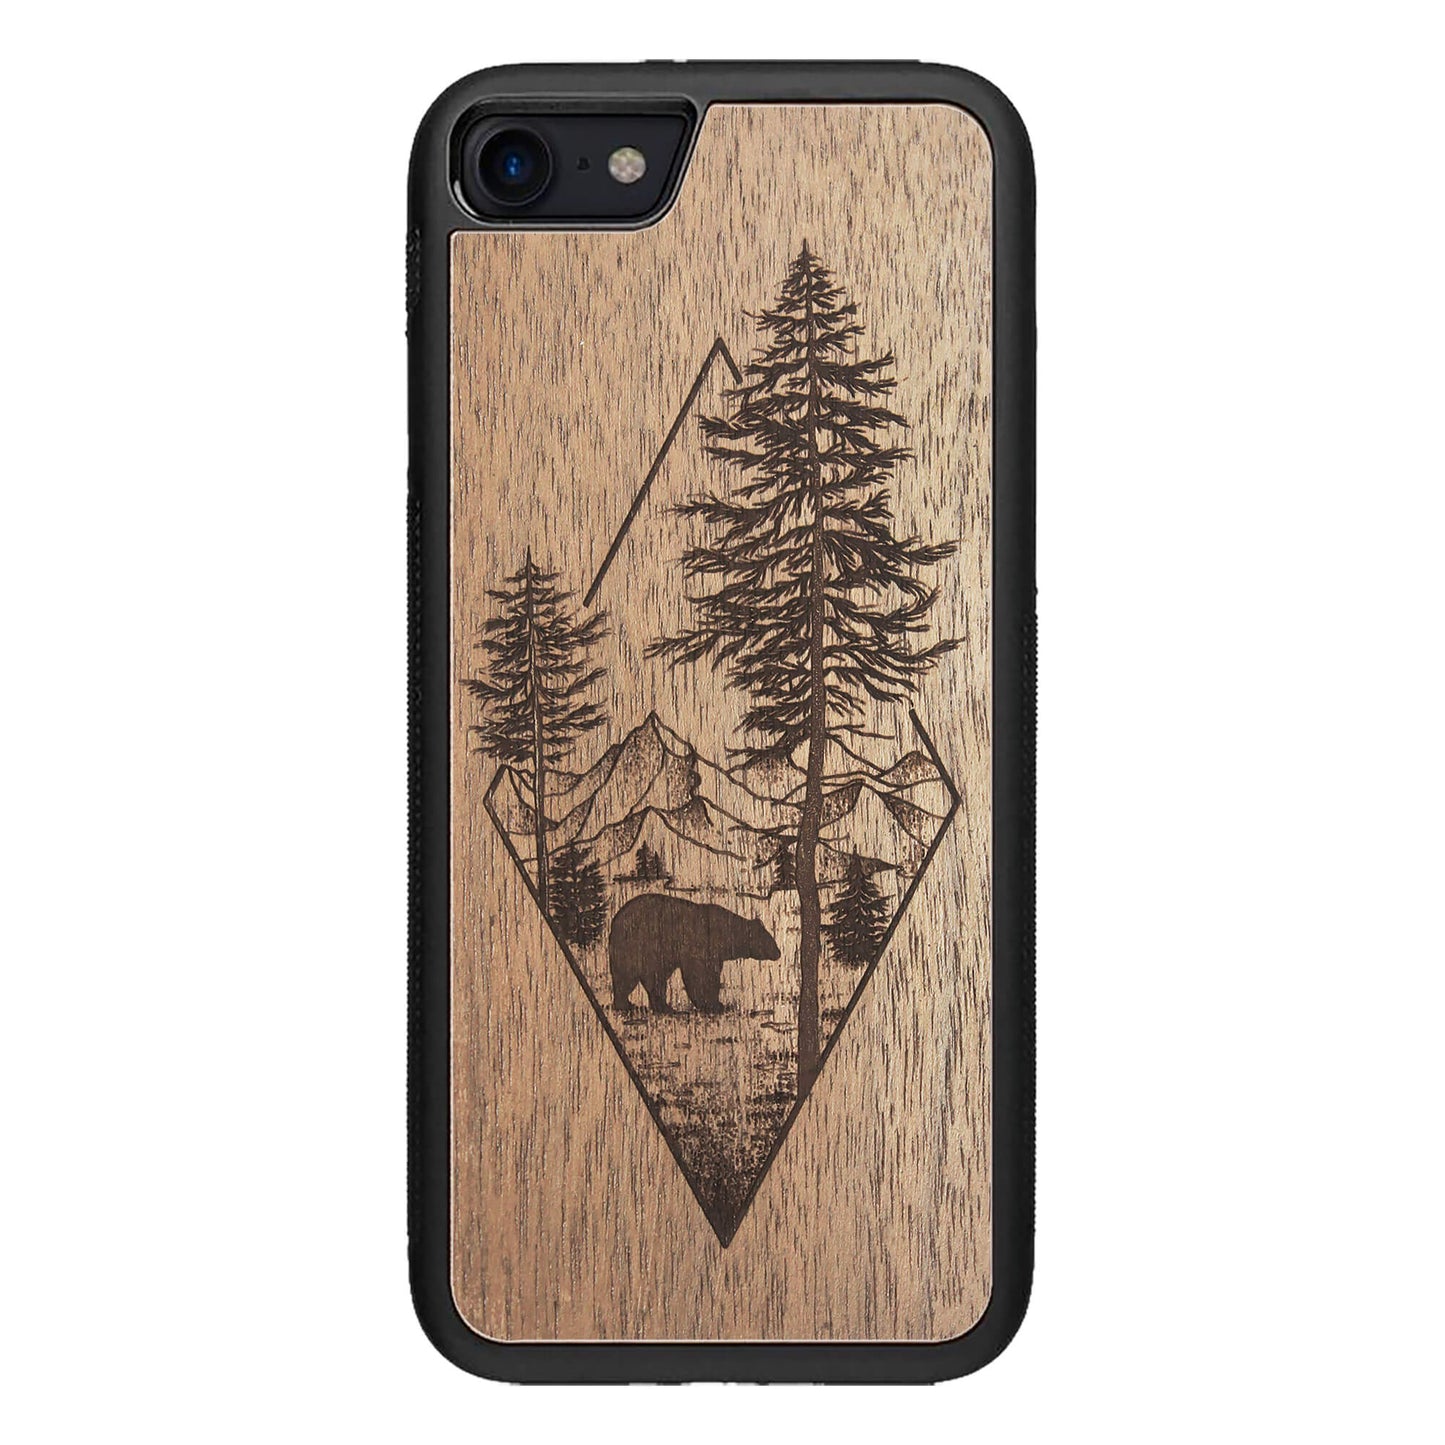 Wooden Case for iPhone SE 2 generation case Woodland Bear